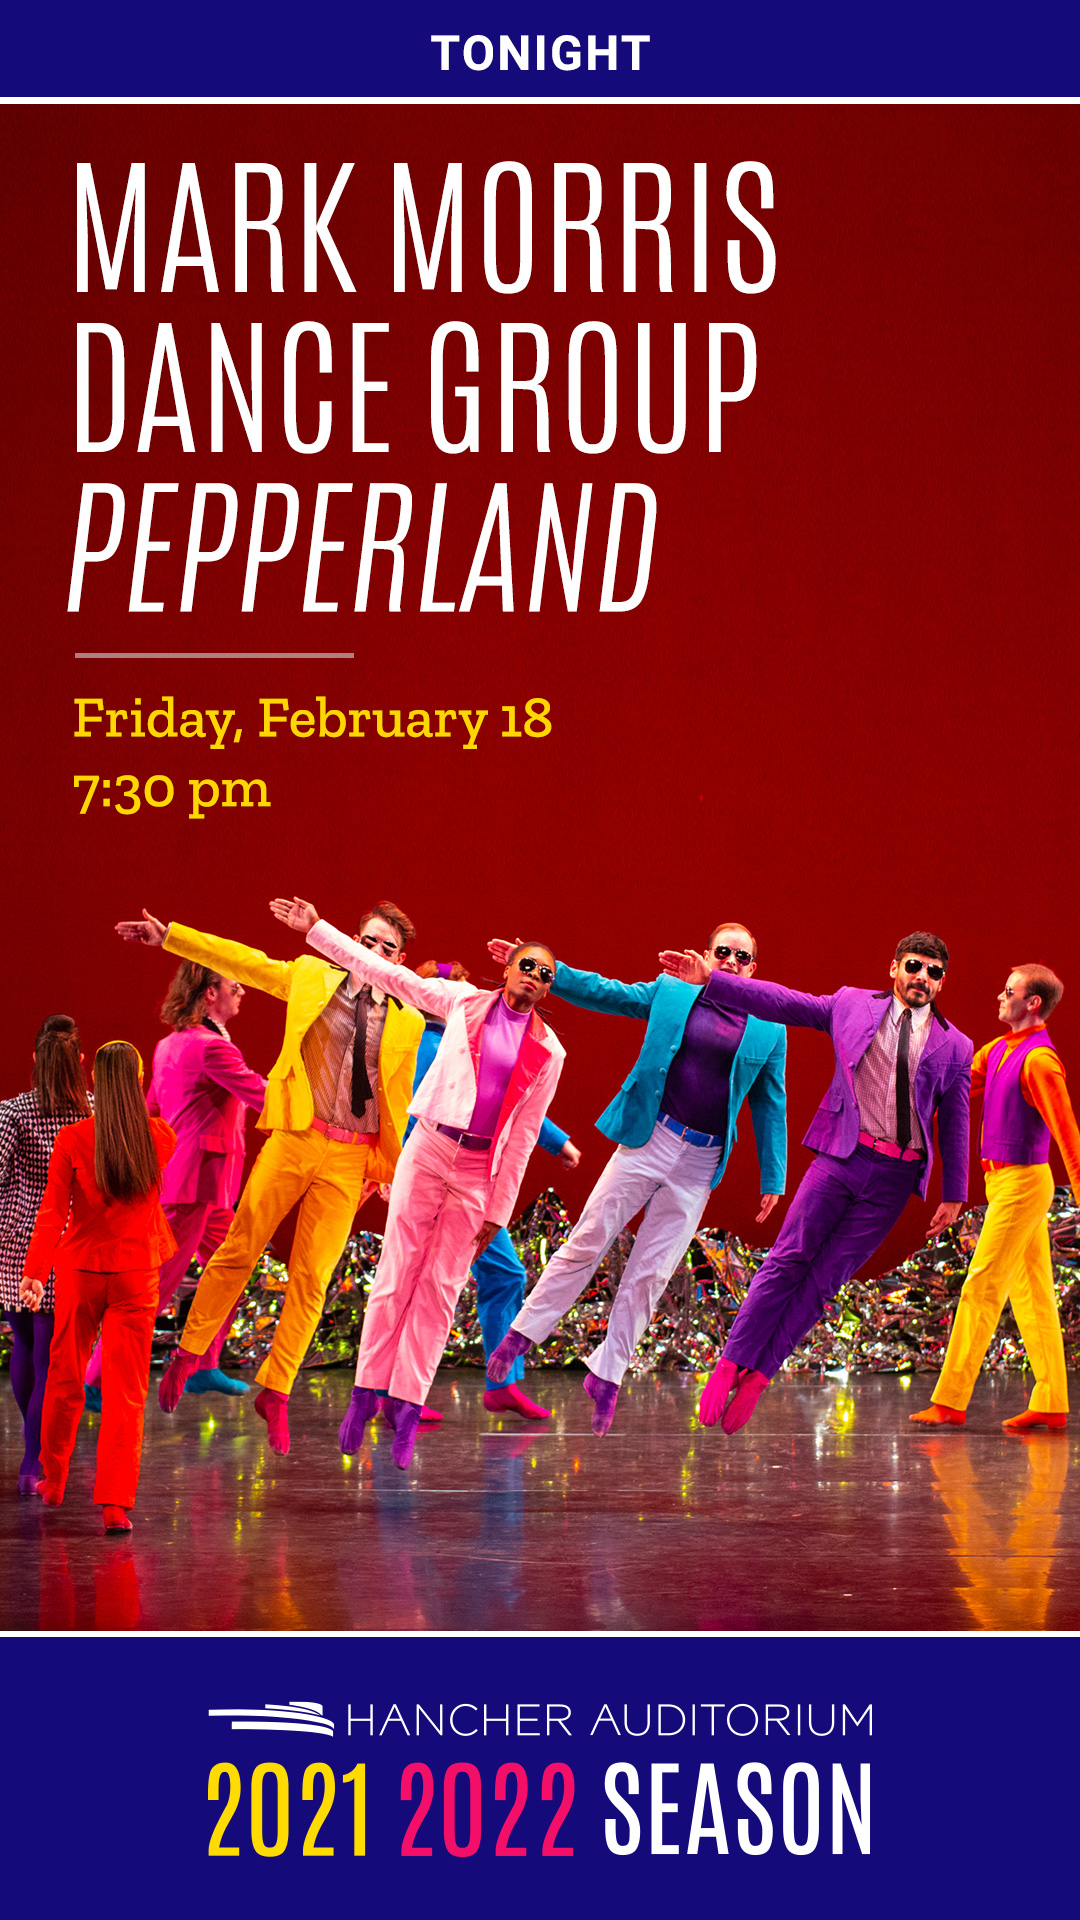 Mark Morris Dance Group, "Pepperland" - Tonight